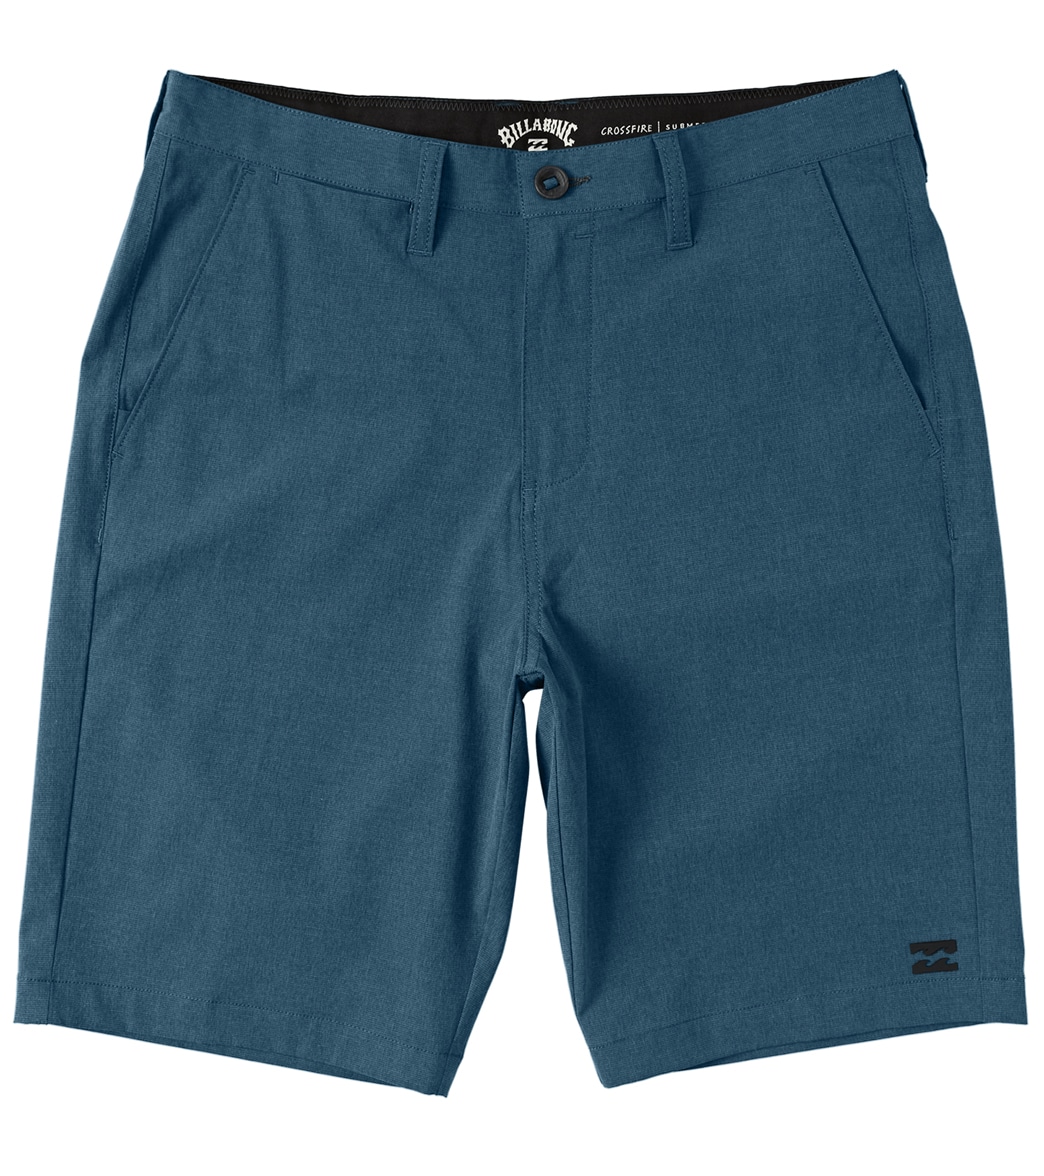 Billabong Men's Crossfire Hybrid Walkshorts - Midnight 33 Cotton/Polyester - Swimoutlet.com